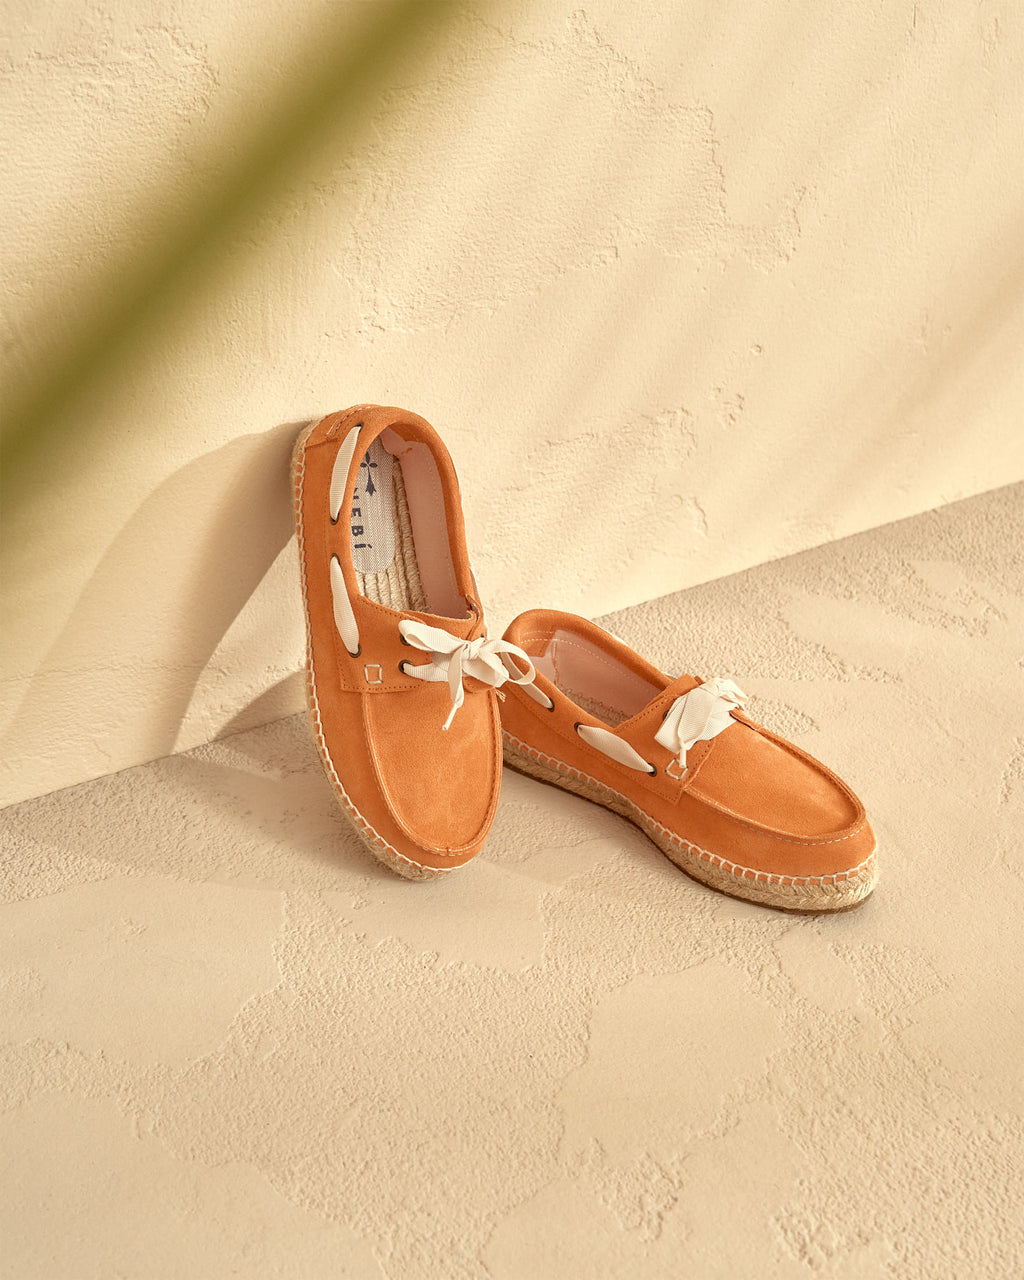 Suede Boat-Shoes Espadrilles - Hamptons - Sunset Orange